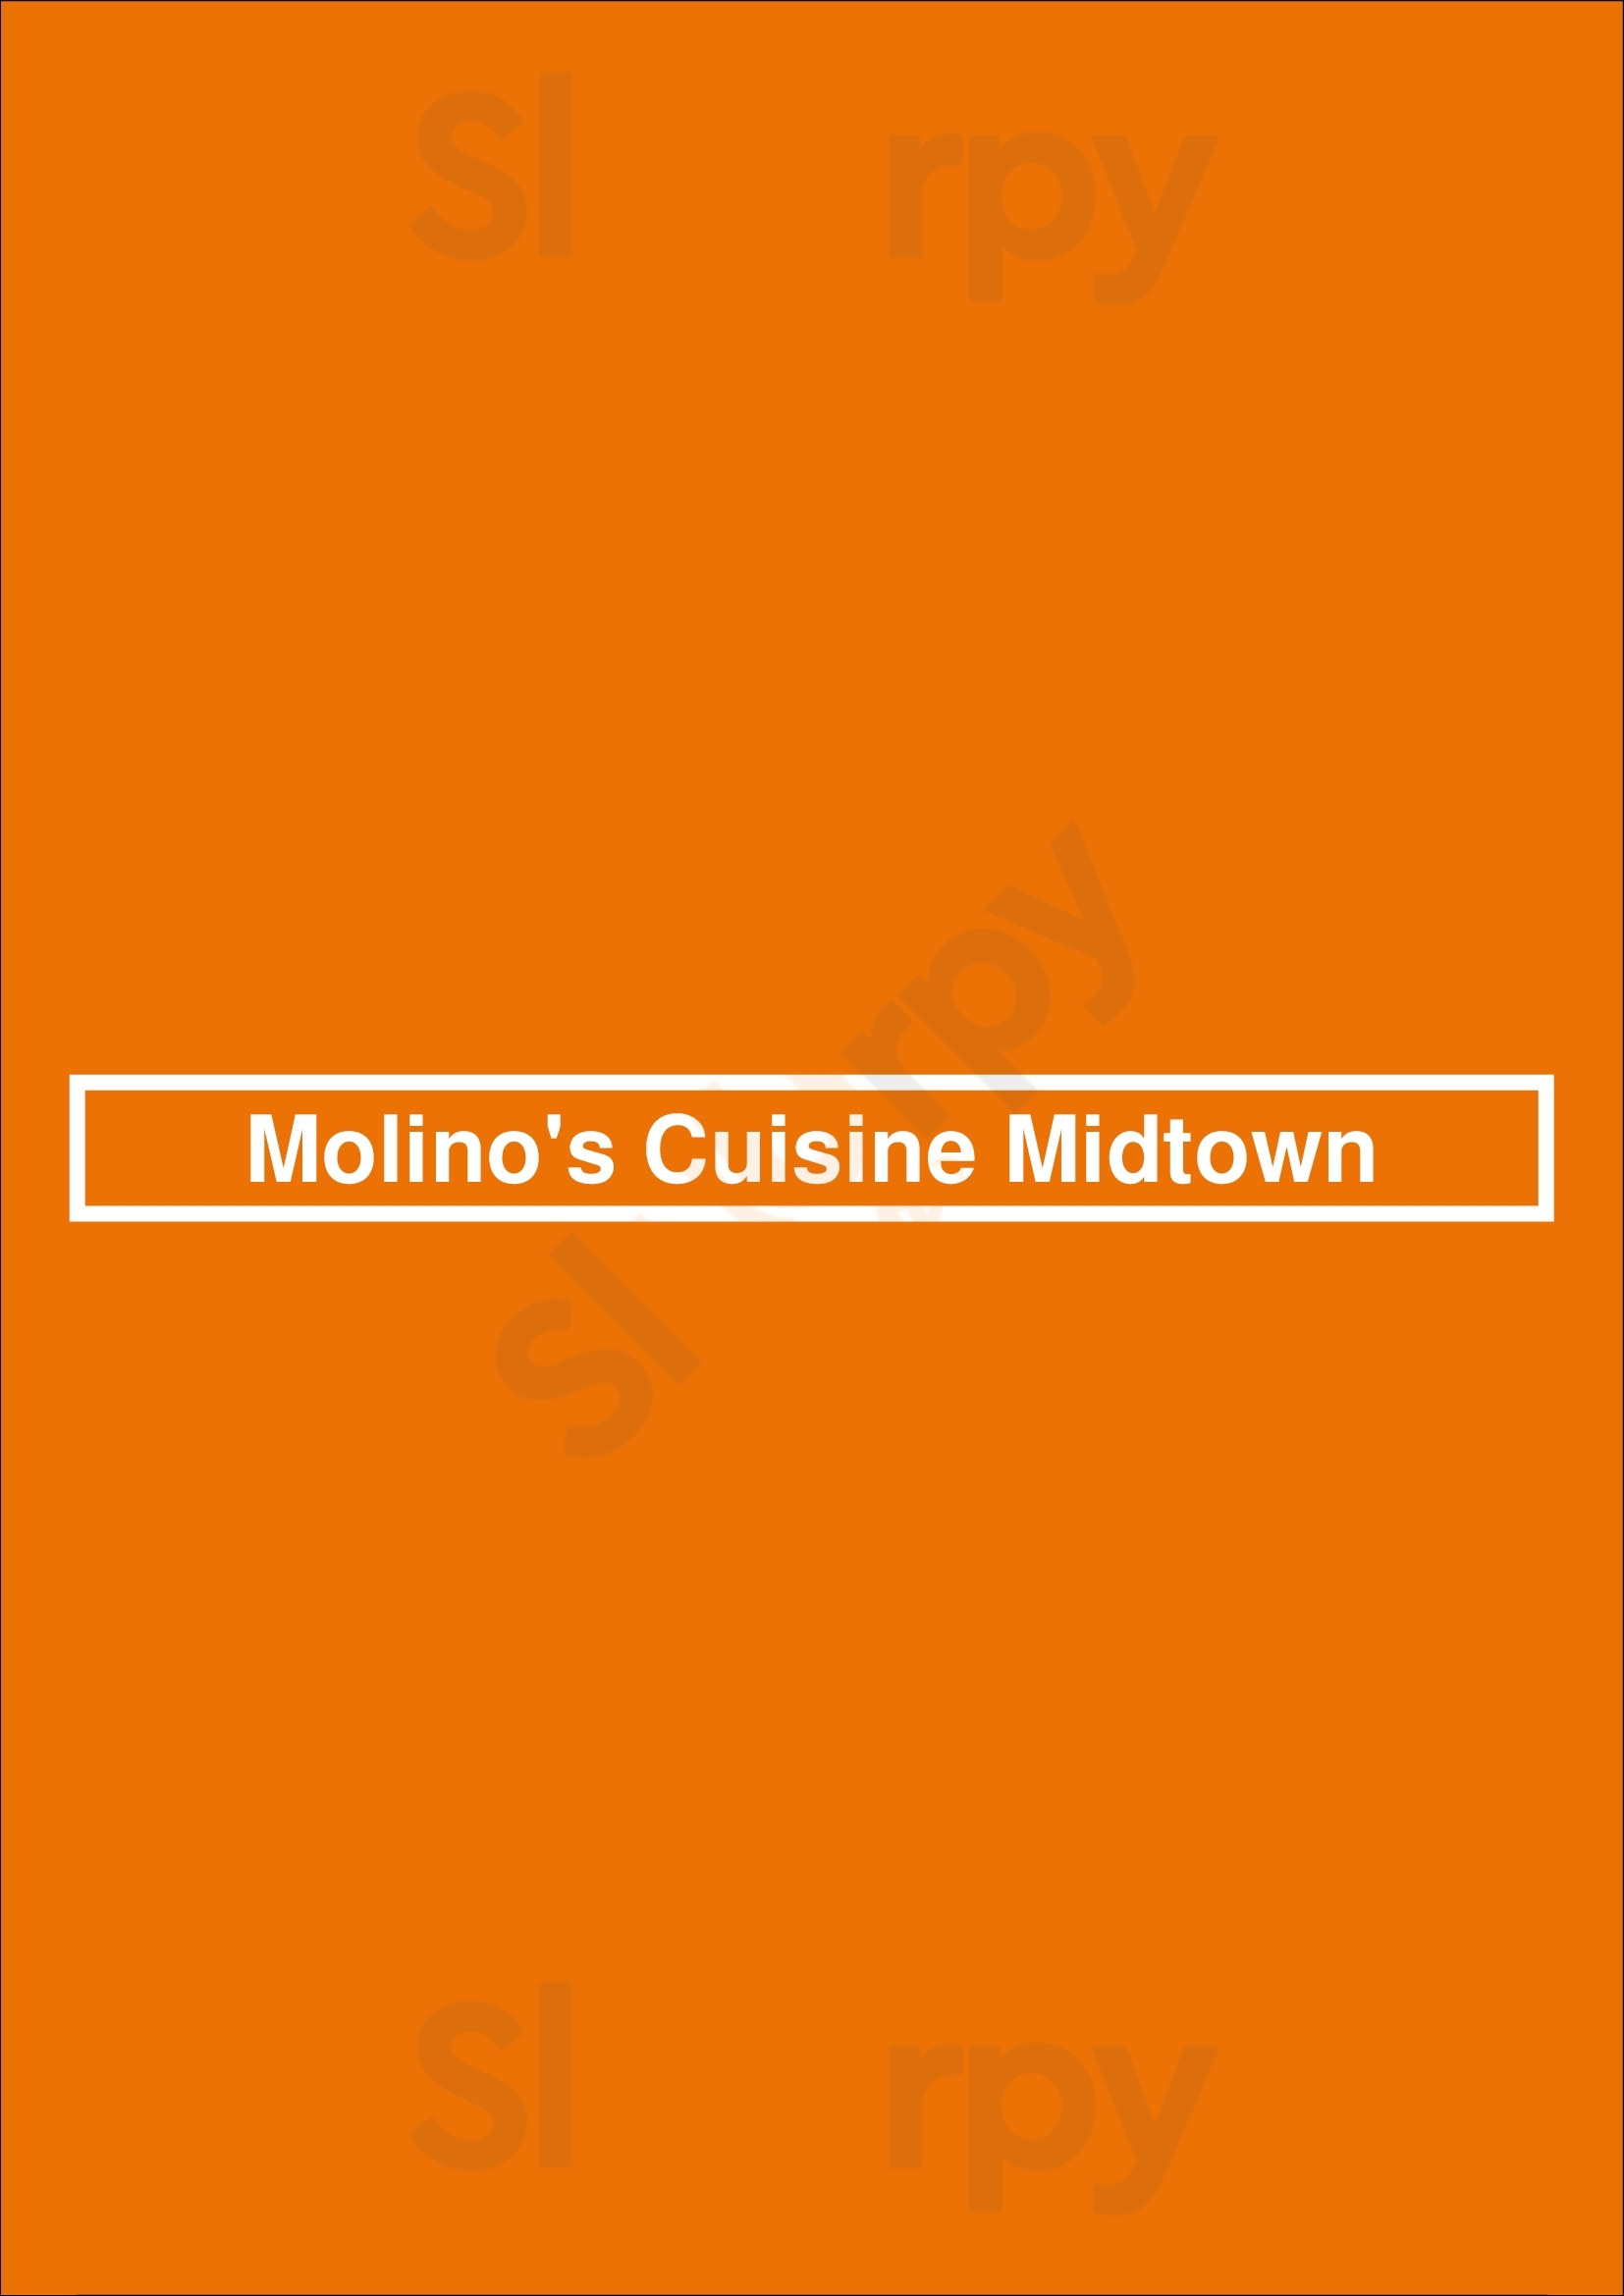 Molino's Cuisine Midtown Wichita Menu - 1